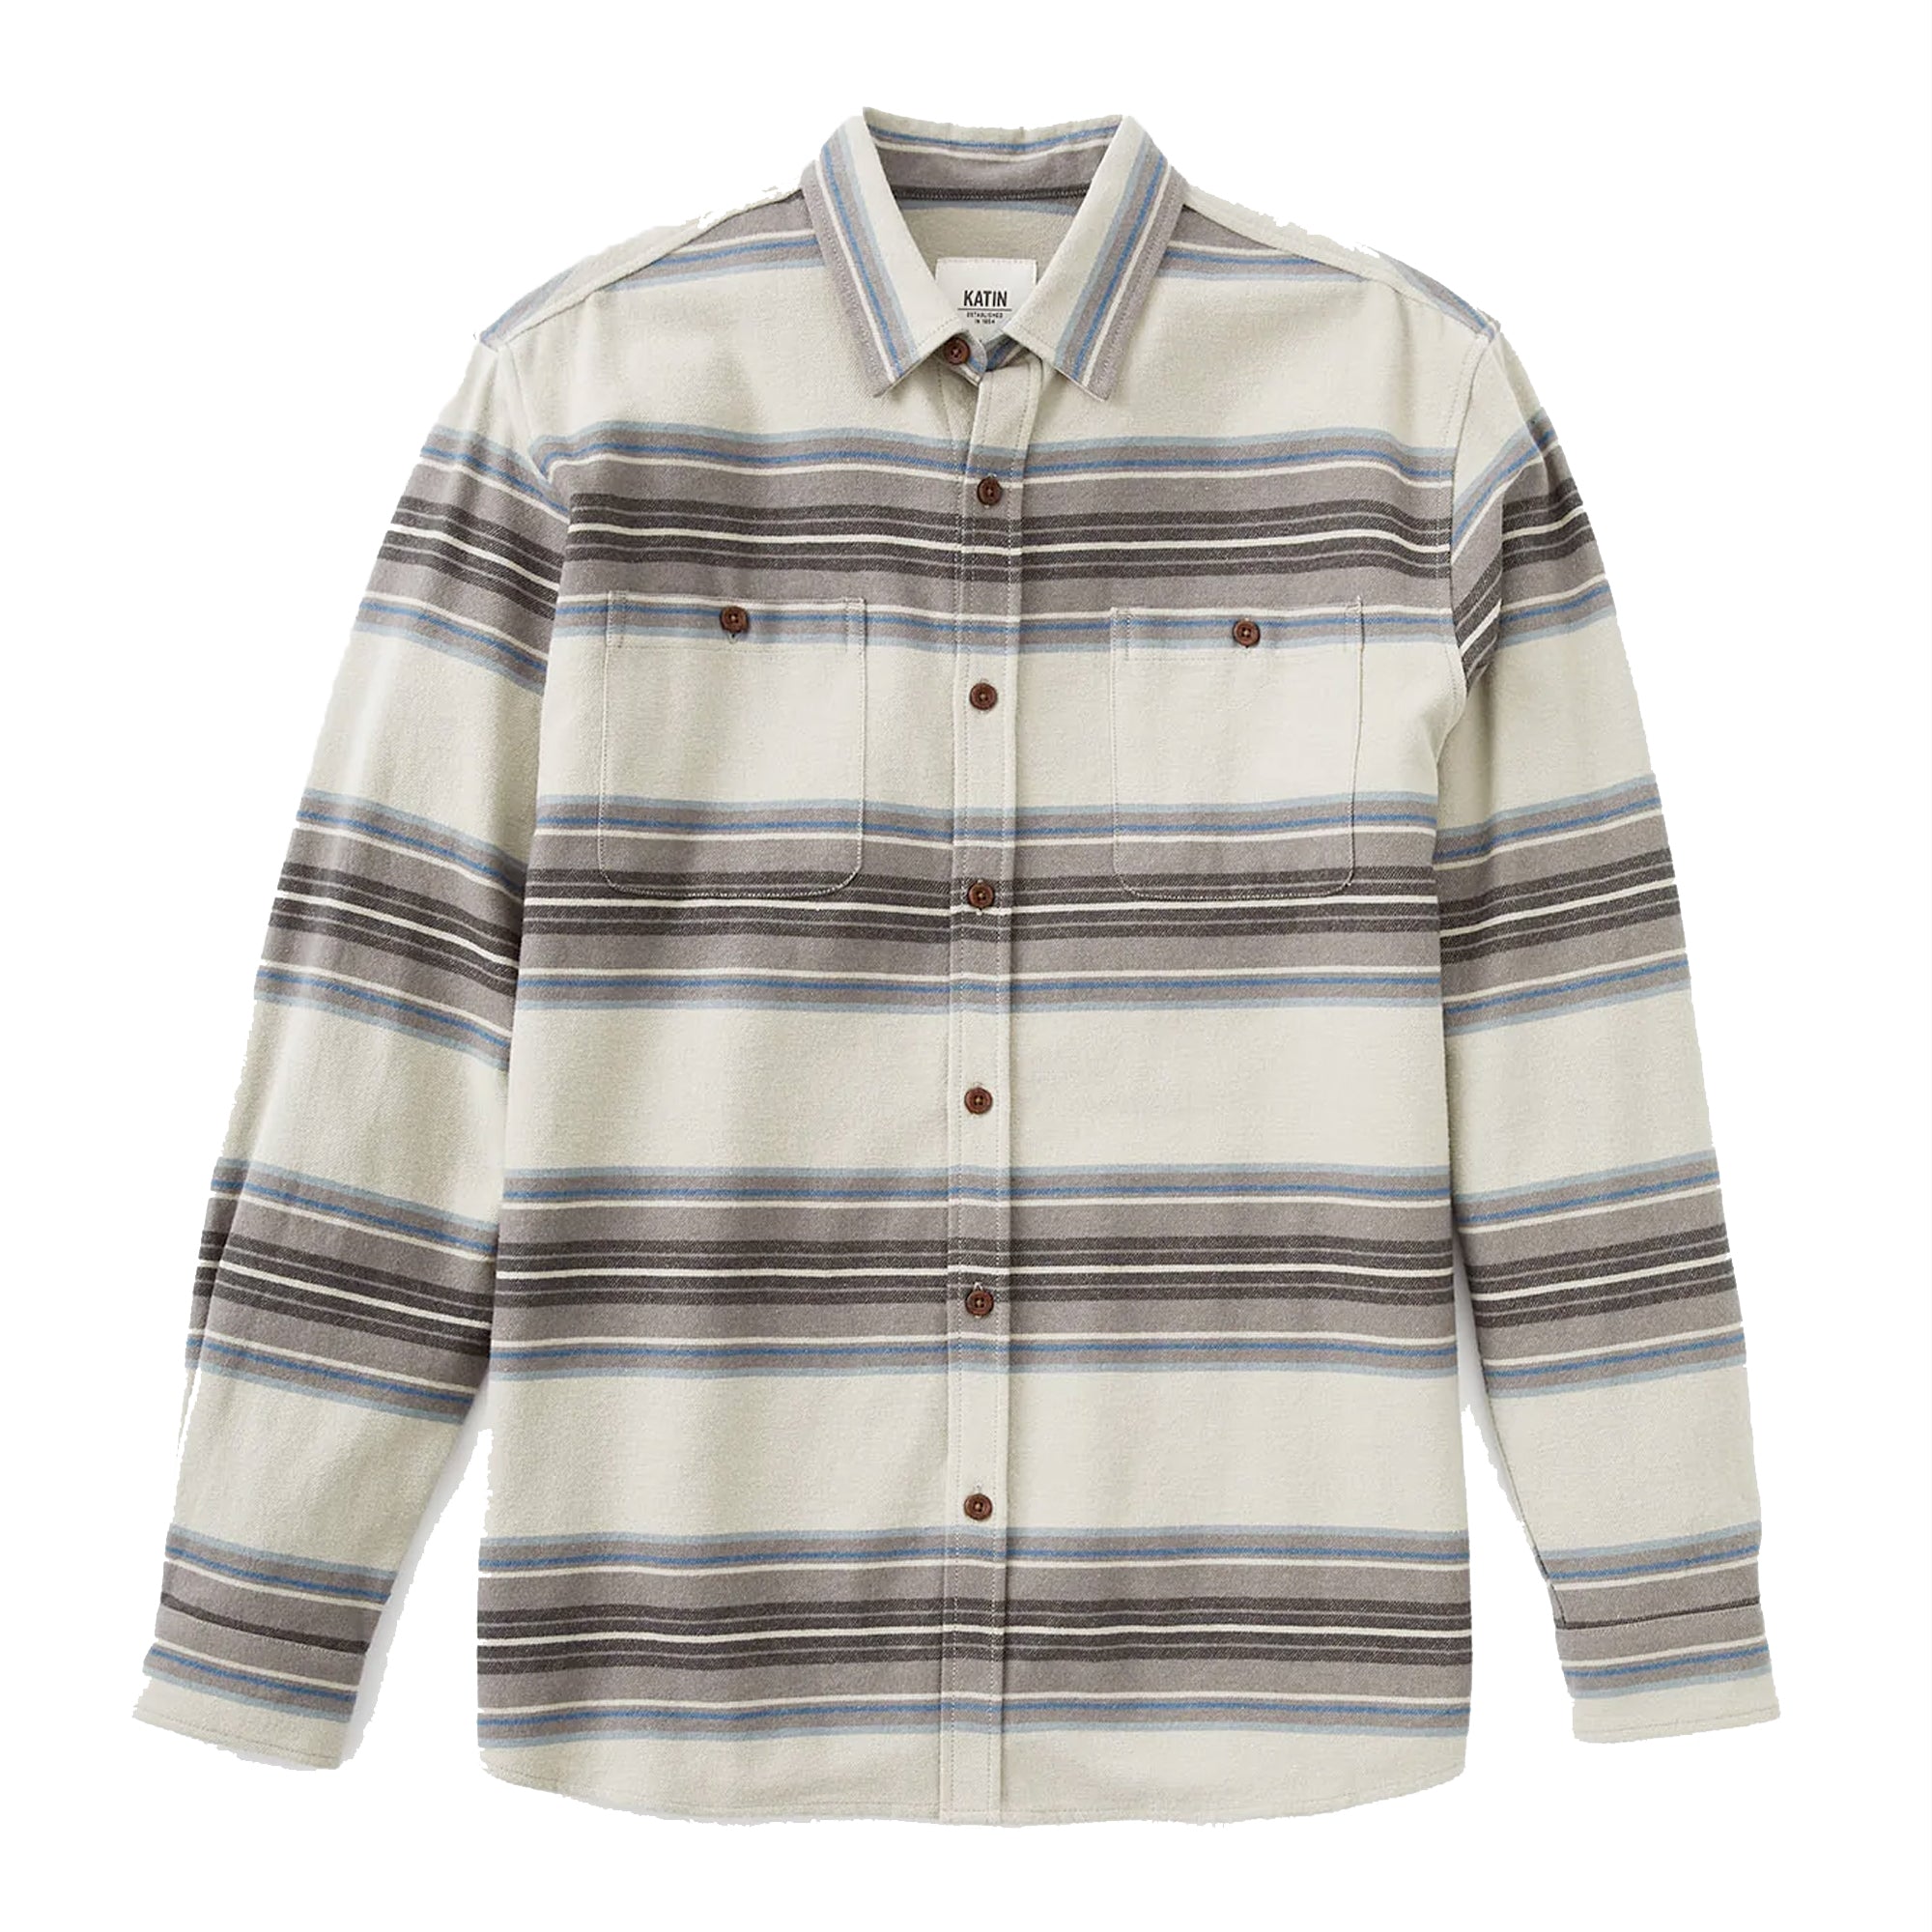 Katin Sierra Men's L/S Flannel Shirt